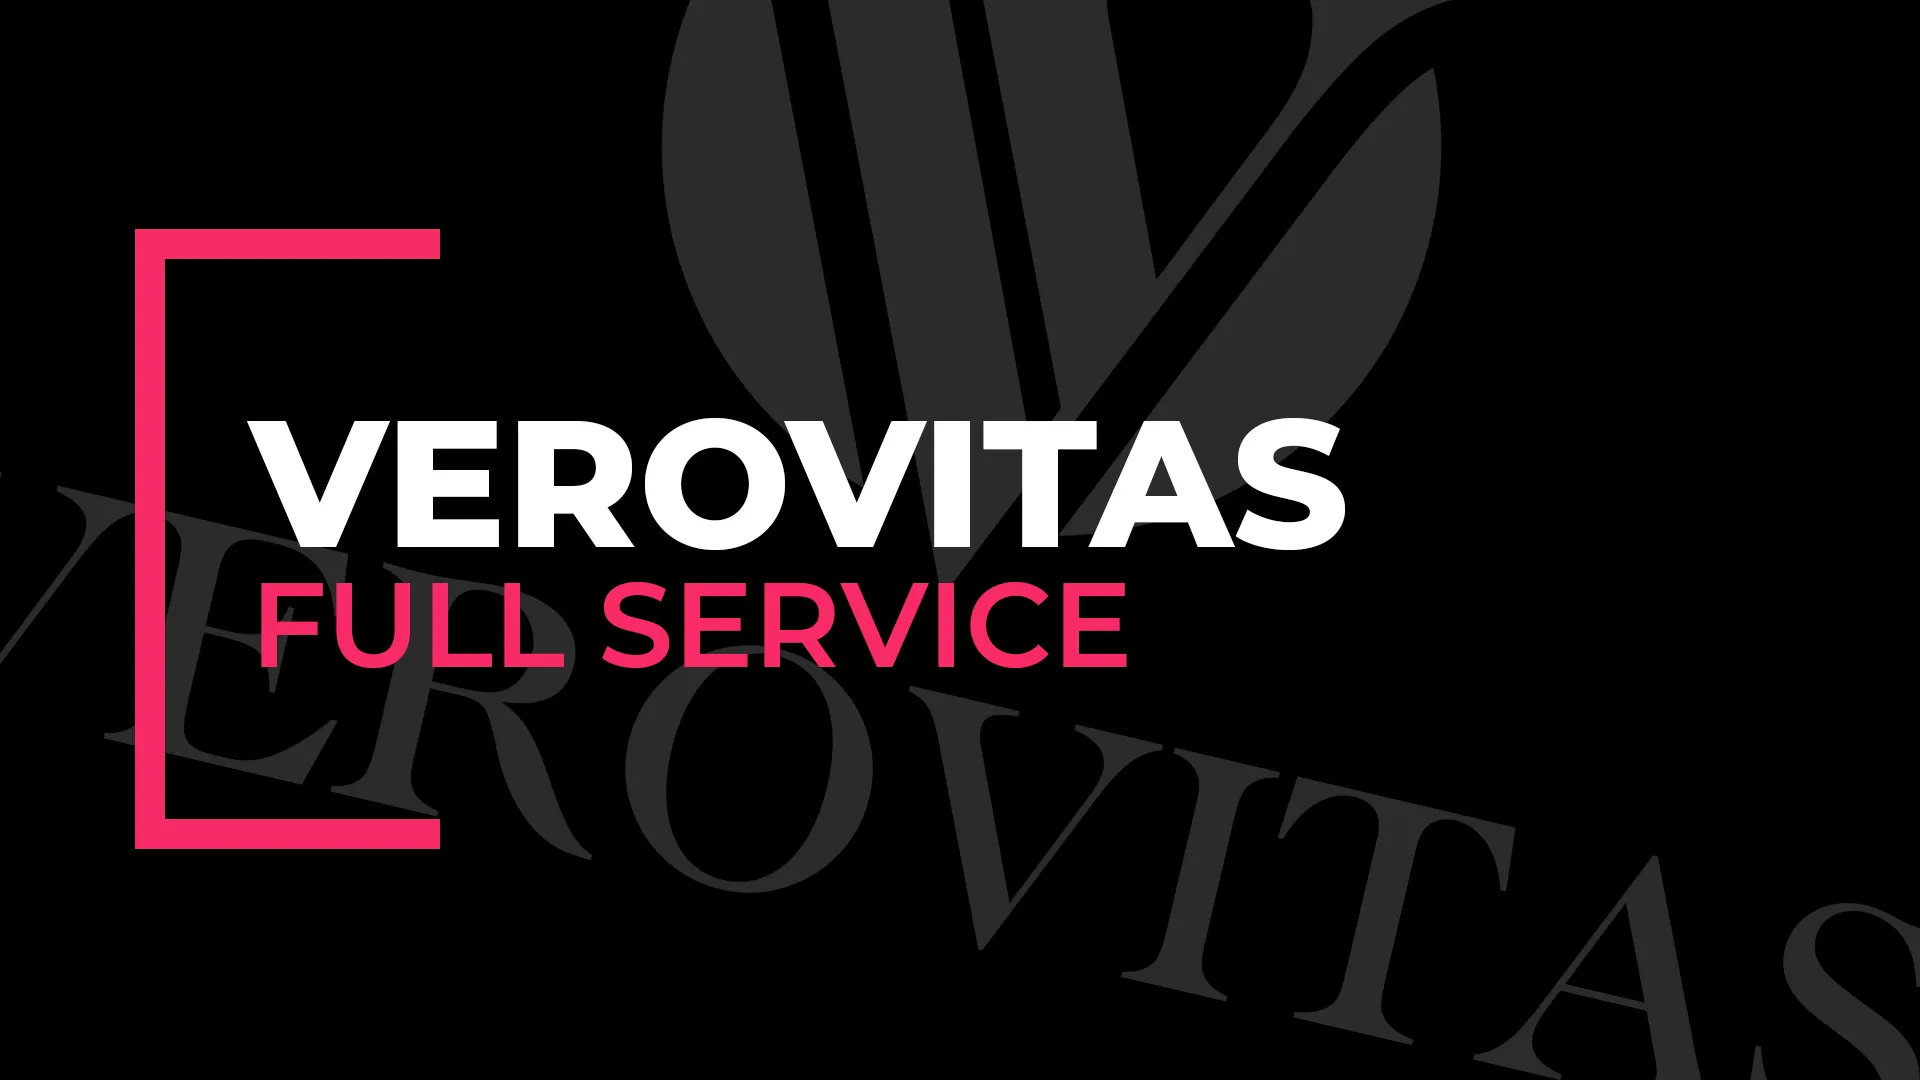 Full Service | VEROVITAS